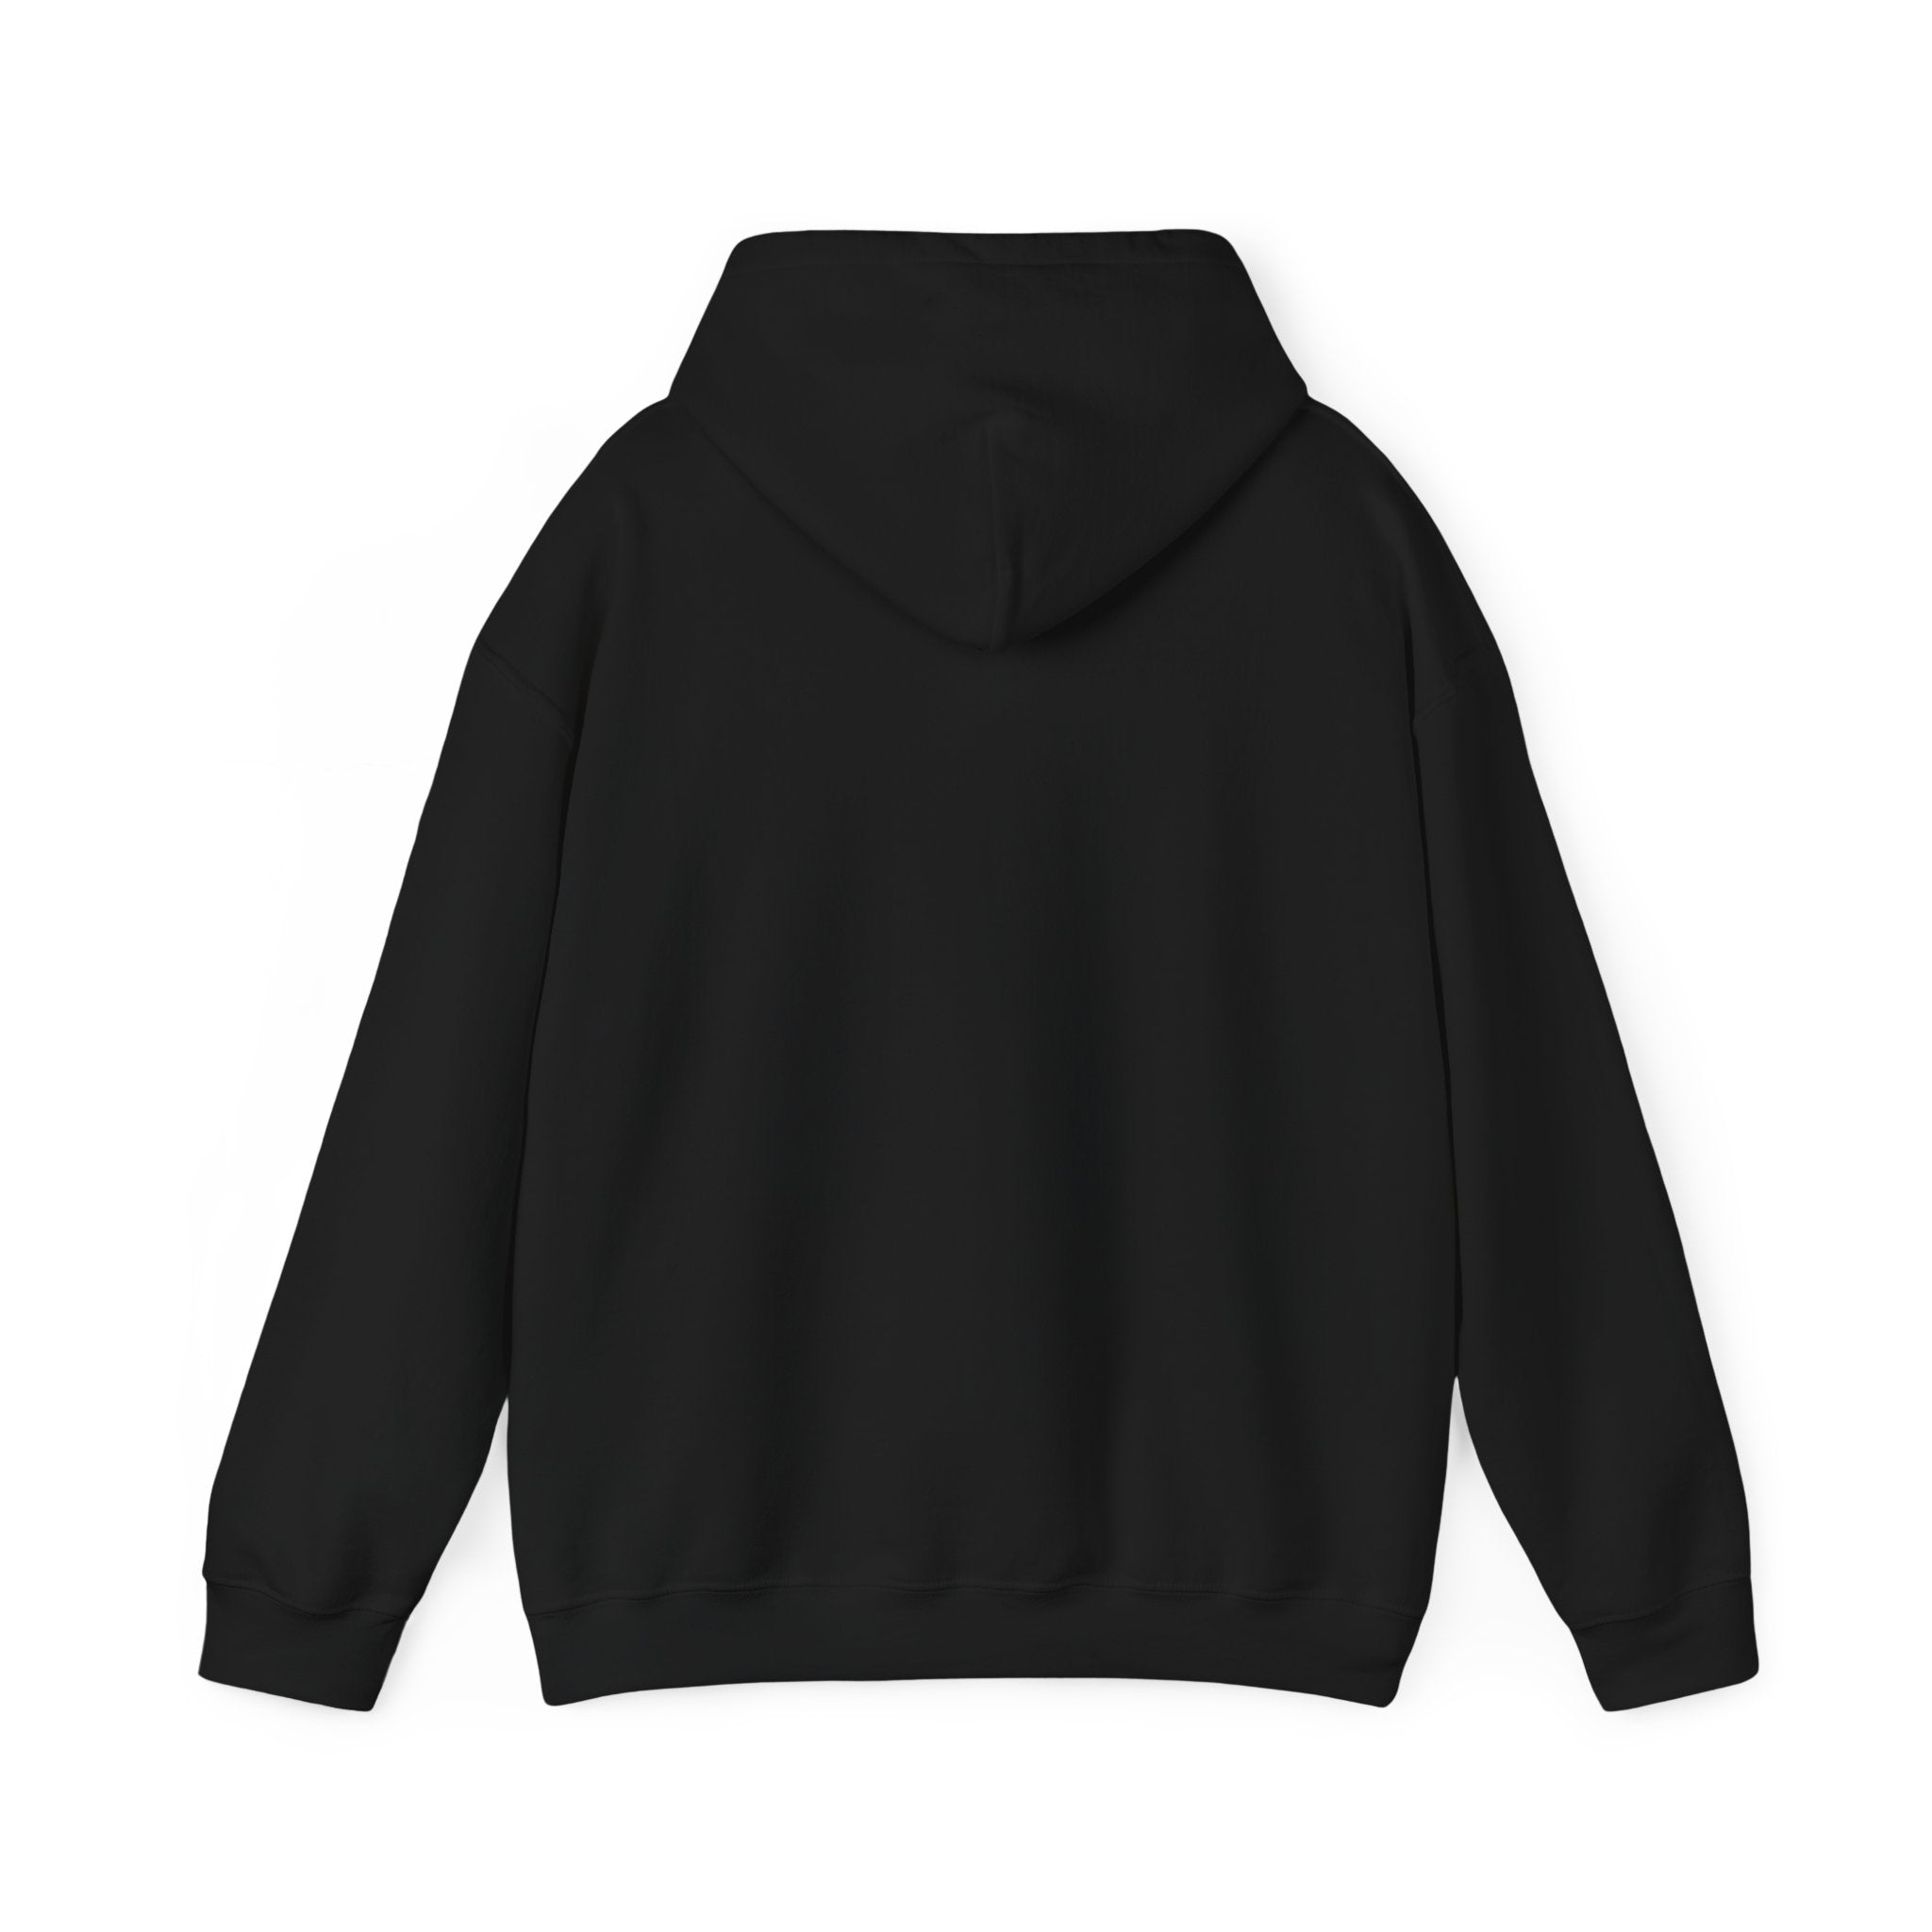 Developer Periodic Table - Hooded Sweatshirt